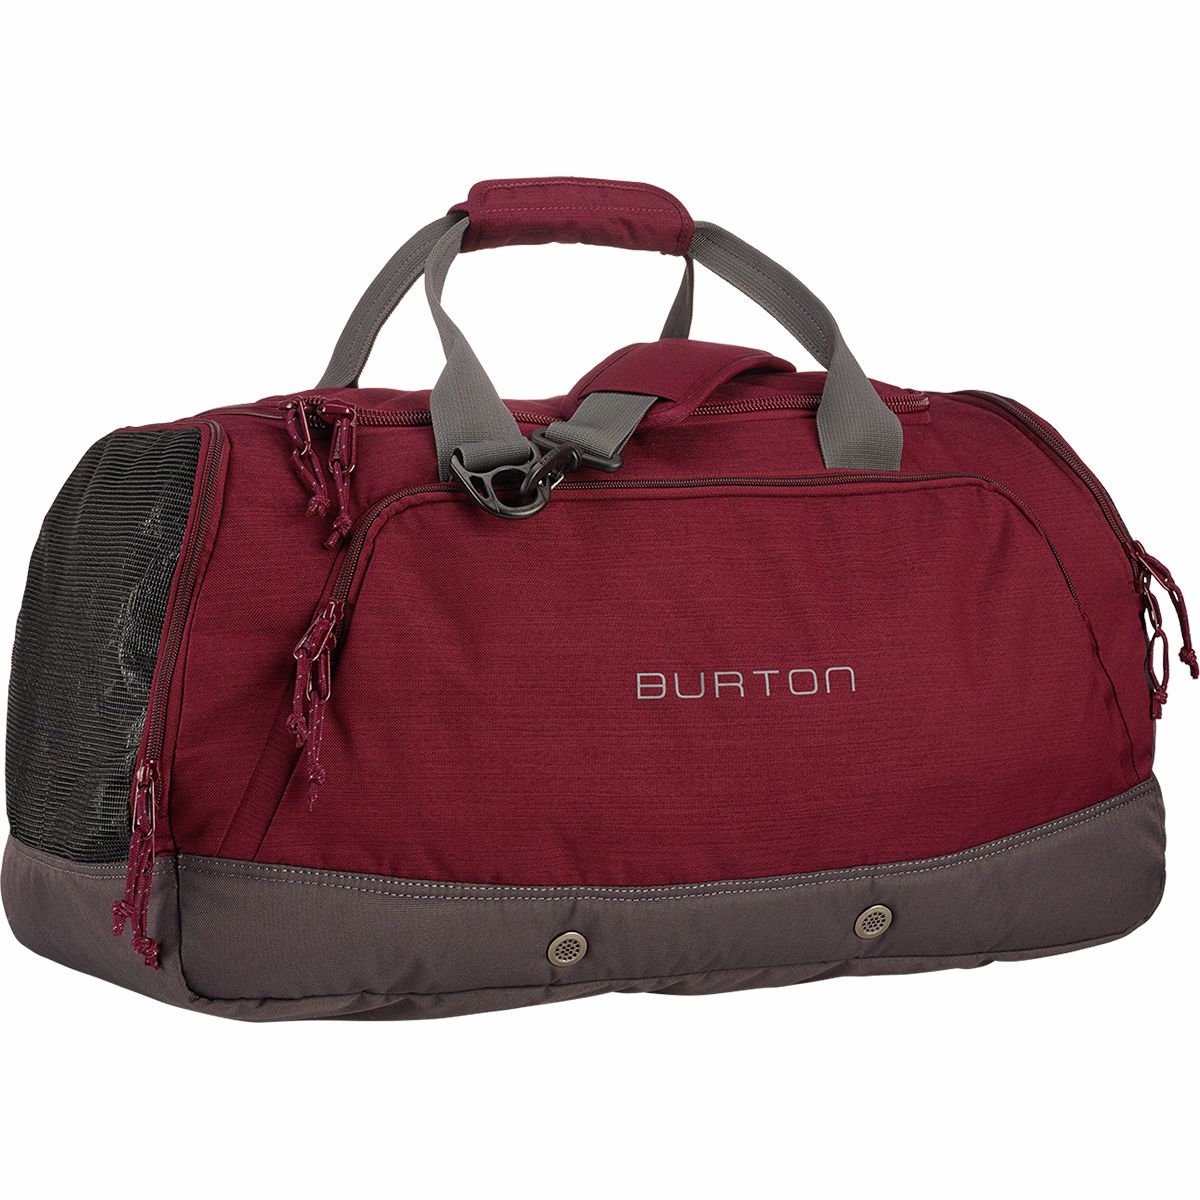 Burton Boothaus 2.0 Large Bag | Backcountry.com